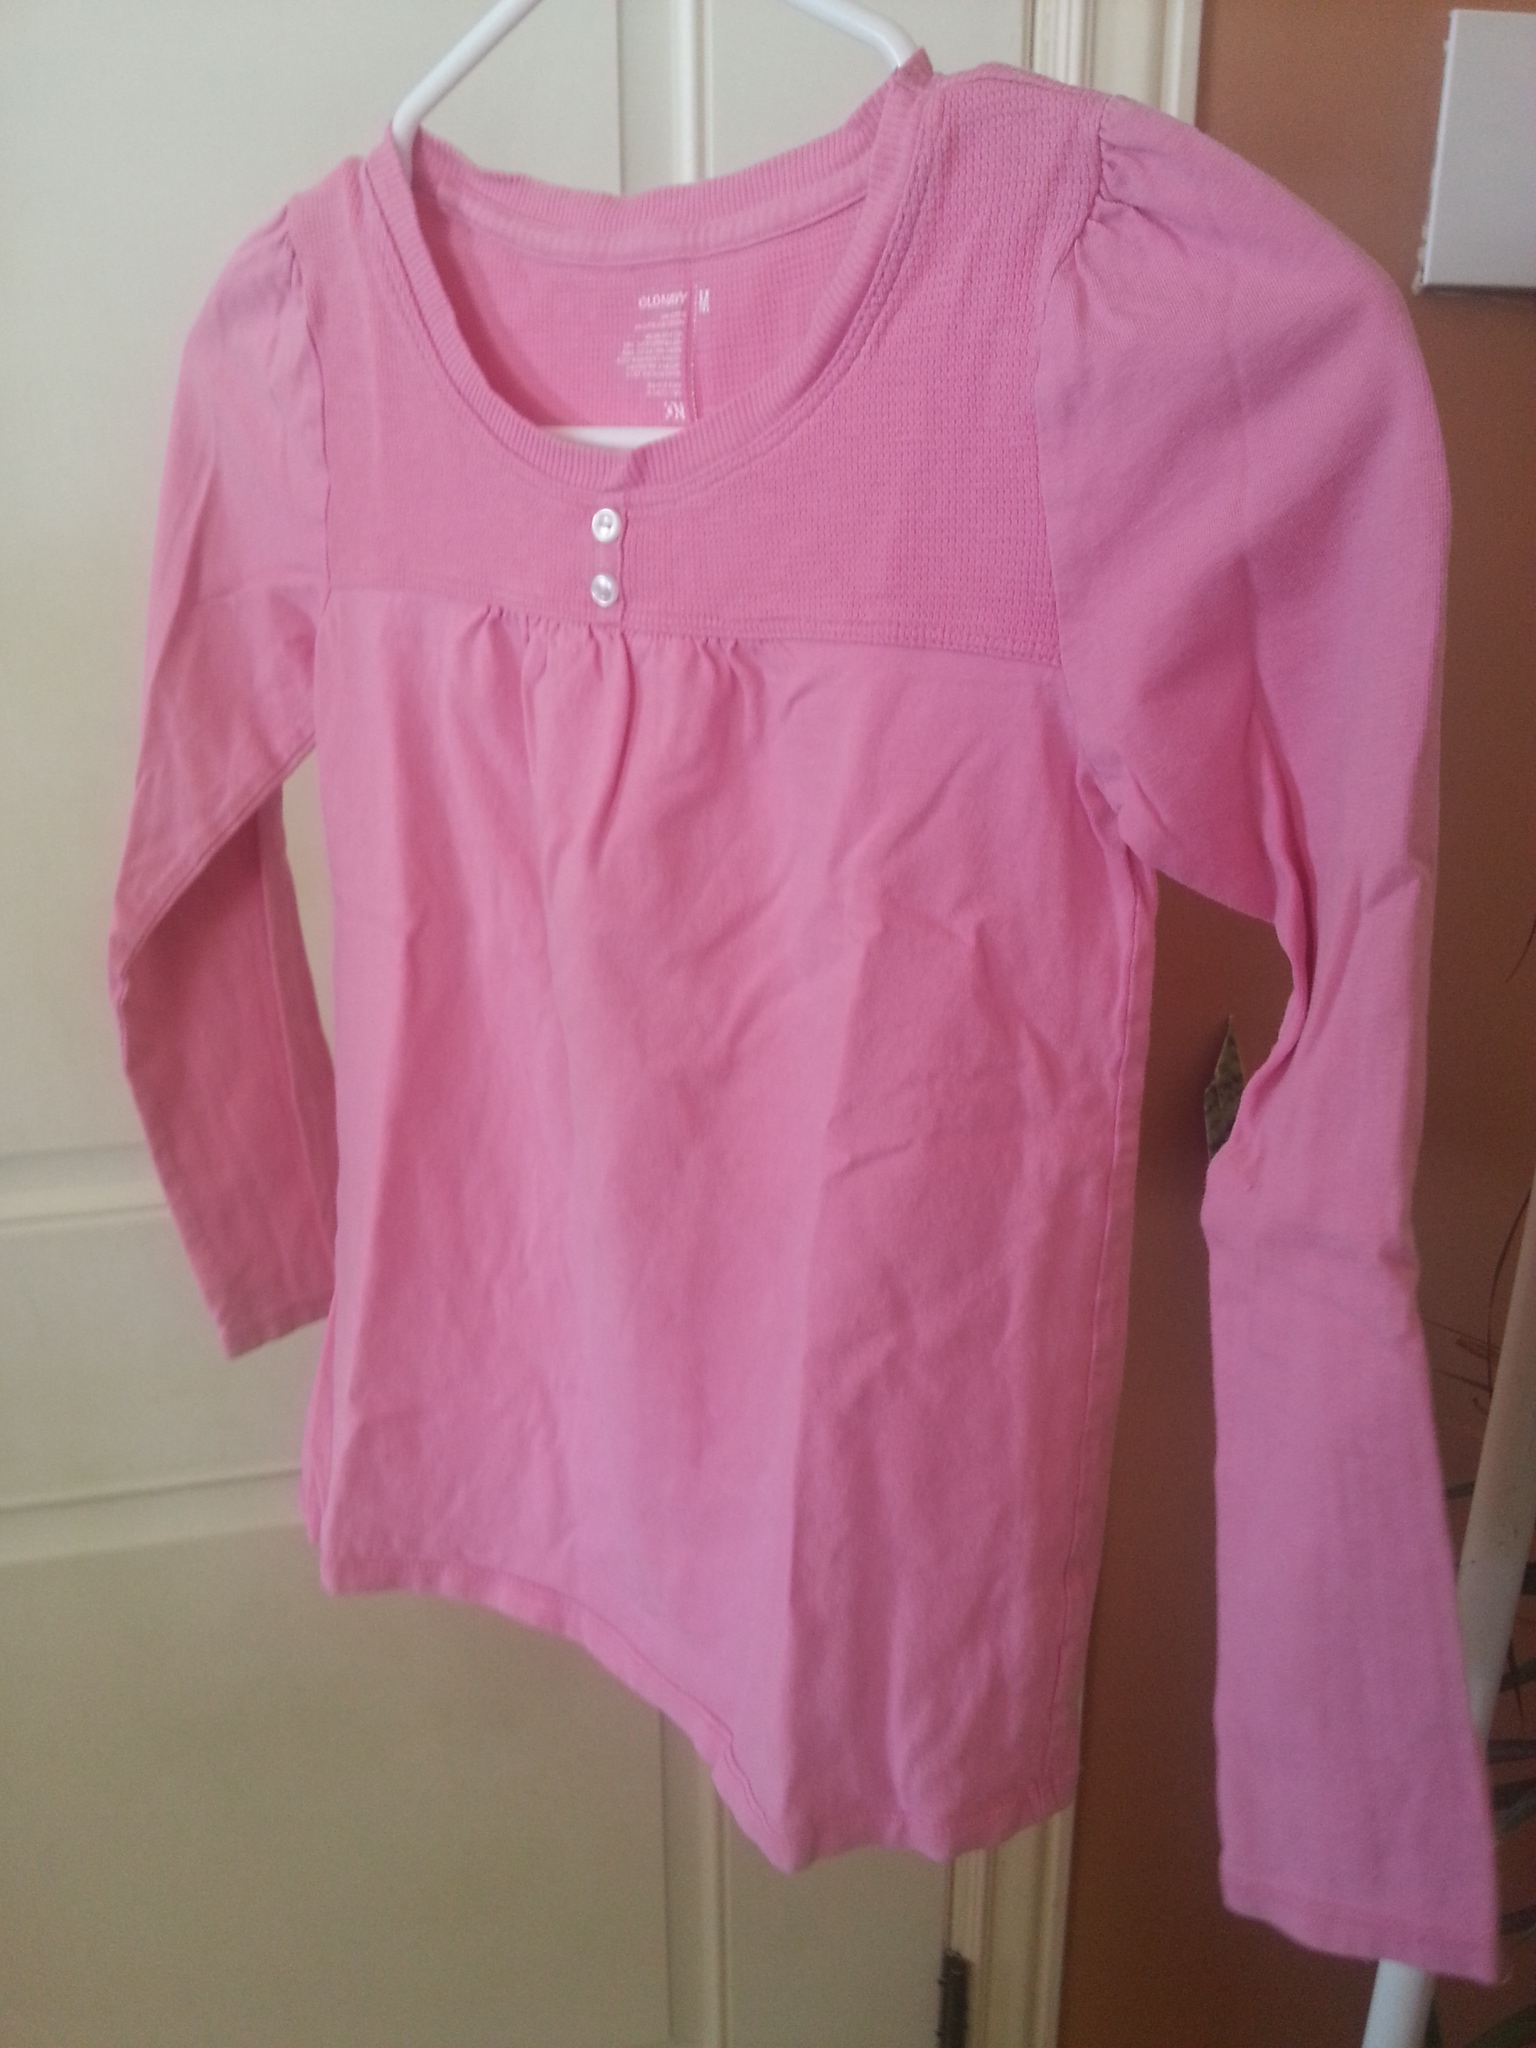 Pink girls shirt -- Old Navy size 6